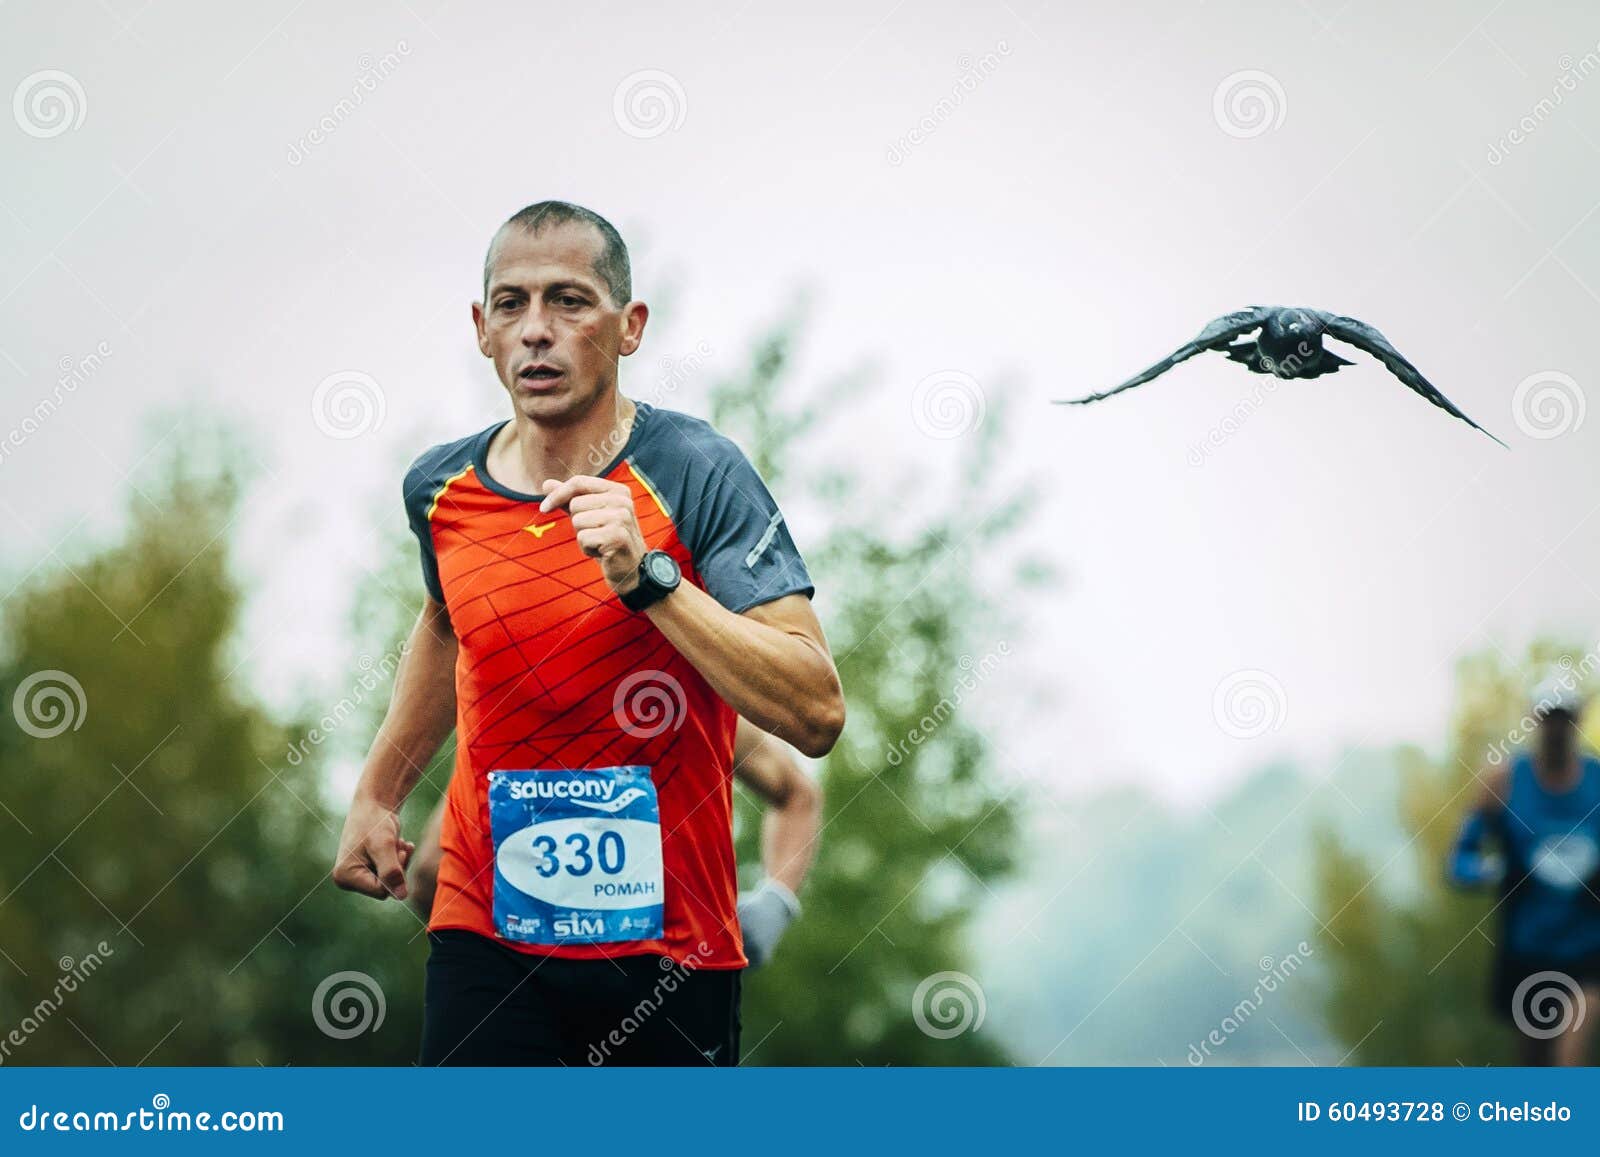 men-middle-aged-runner-running-him-flying-pigeon-omsk-russia-september-man-siberian-international-marathon-60493728.jpg